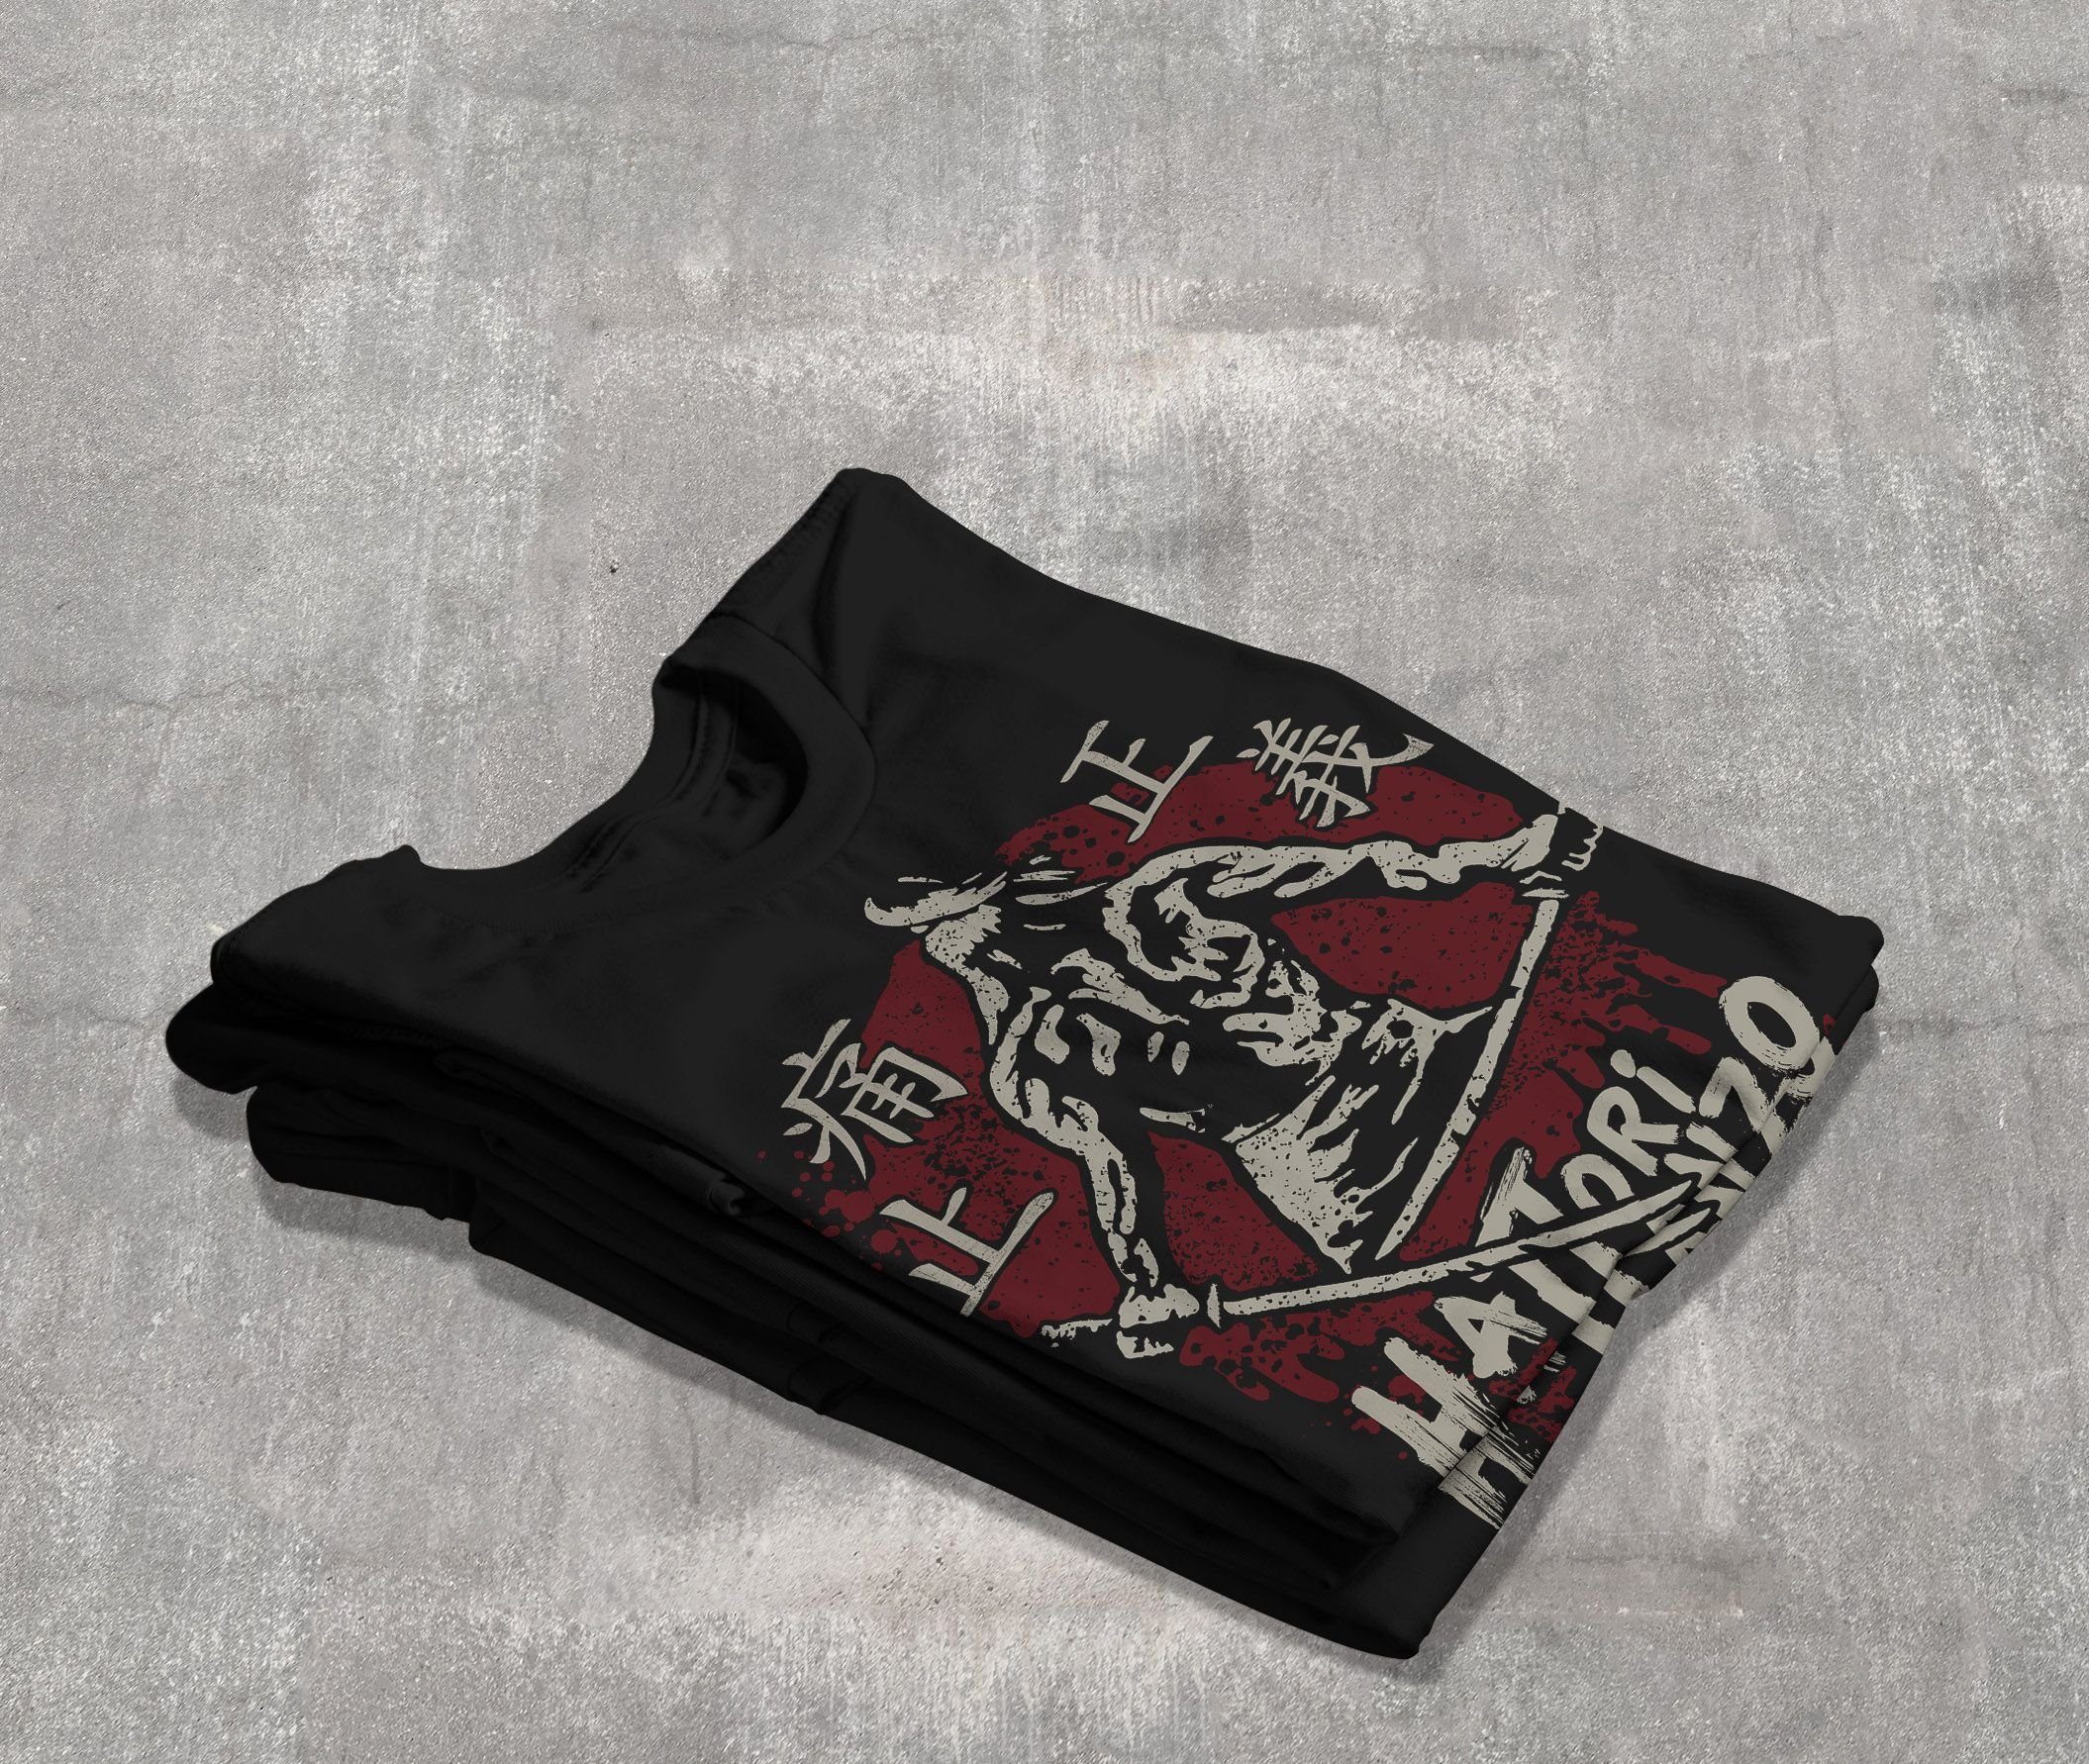 Neverless Print-Shirt Neverless® Herren T-Shirt Samurai japanische Schriftzeichen Schriftzug Hattori Hanzo Fashion Streetstyle mit Print schwarz